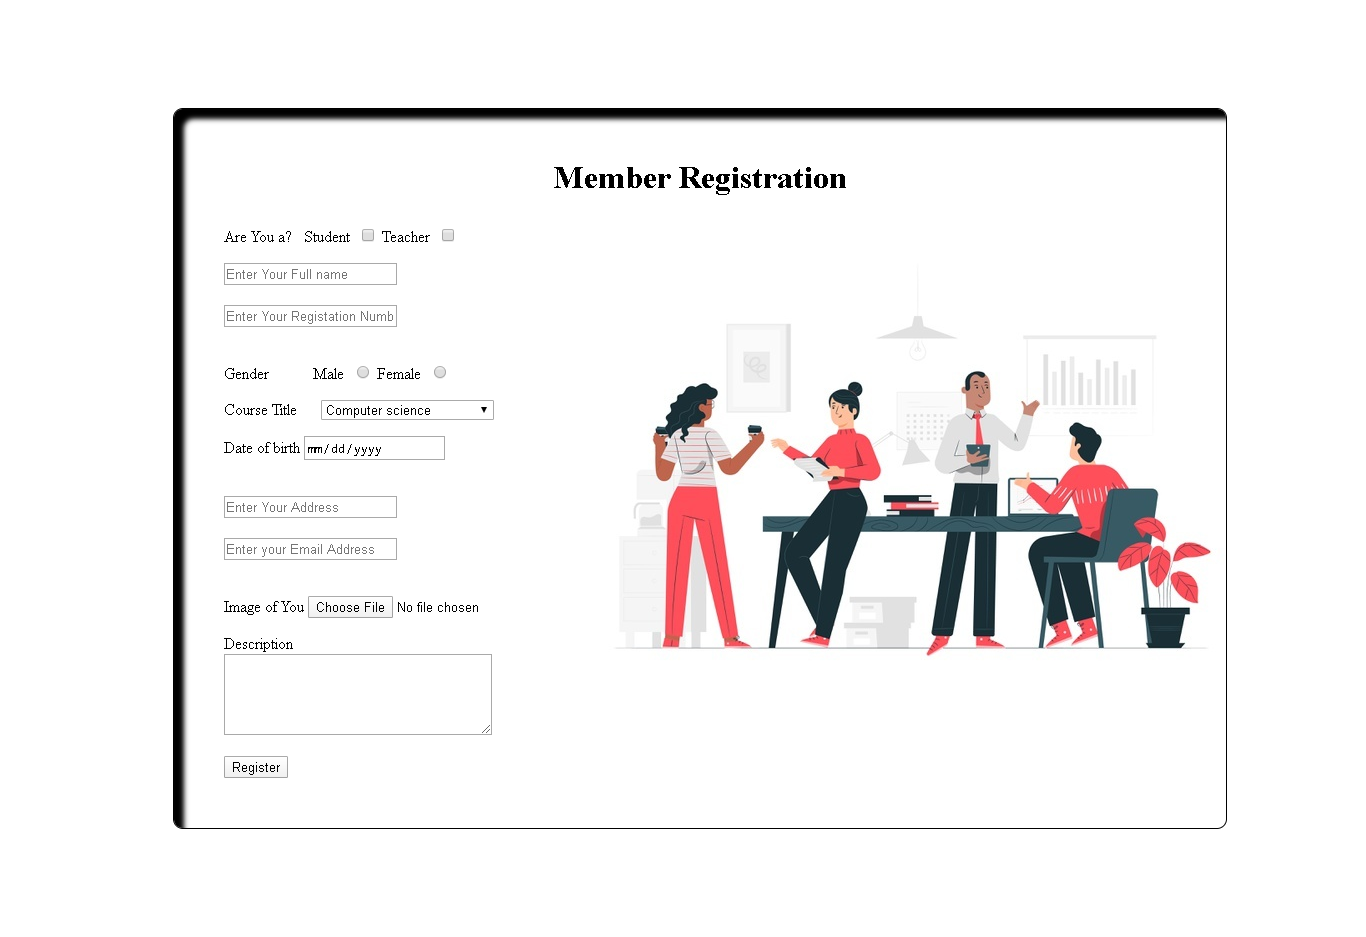 Registration Form Design Using HTML & CSS - MAZ TECH